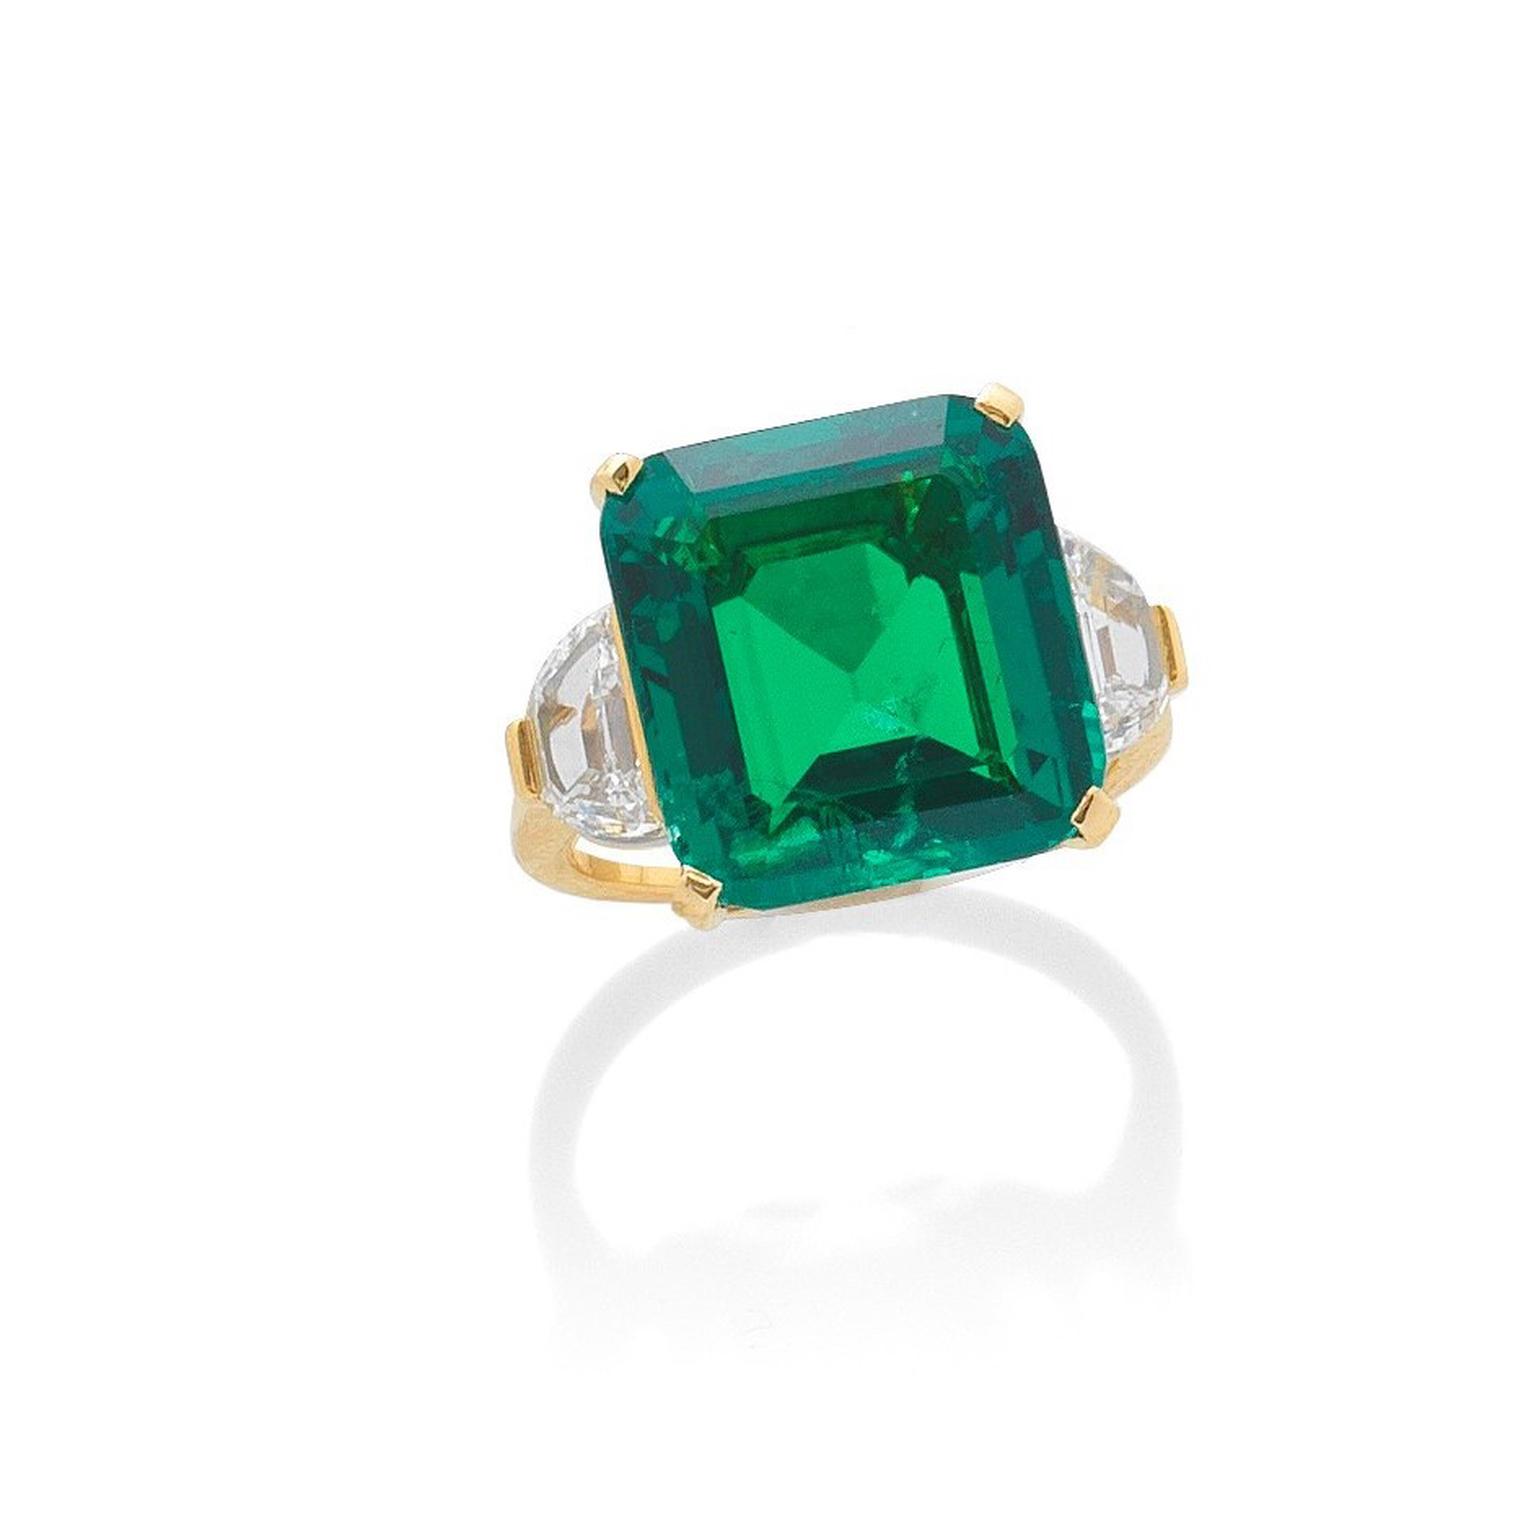 Emerald and diamond ring by Bulgari auctionned by Bonhams Lot 115 - 